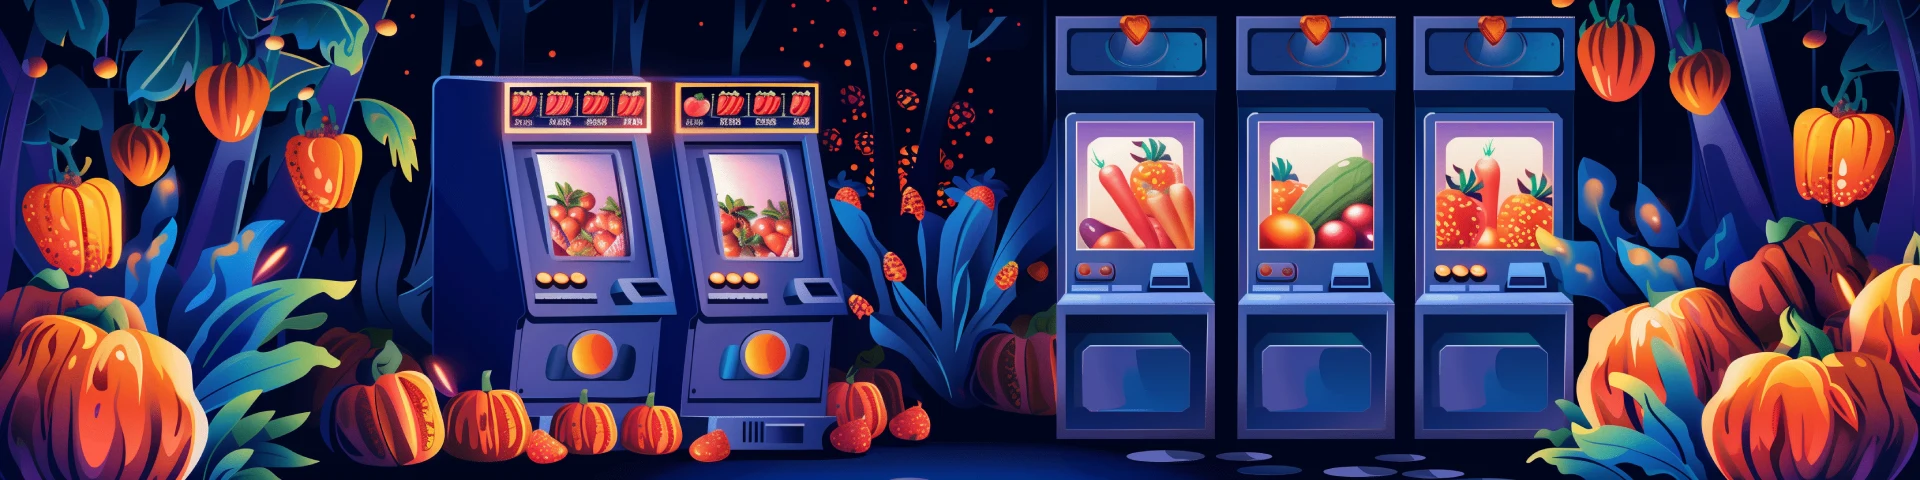 Fresh vegetables inside slot machines cartoon banner